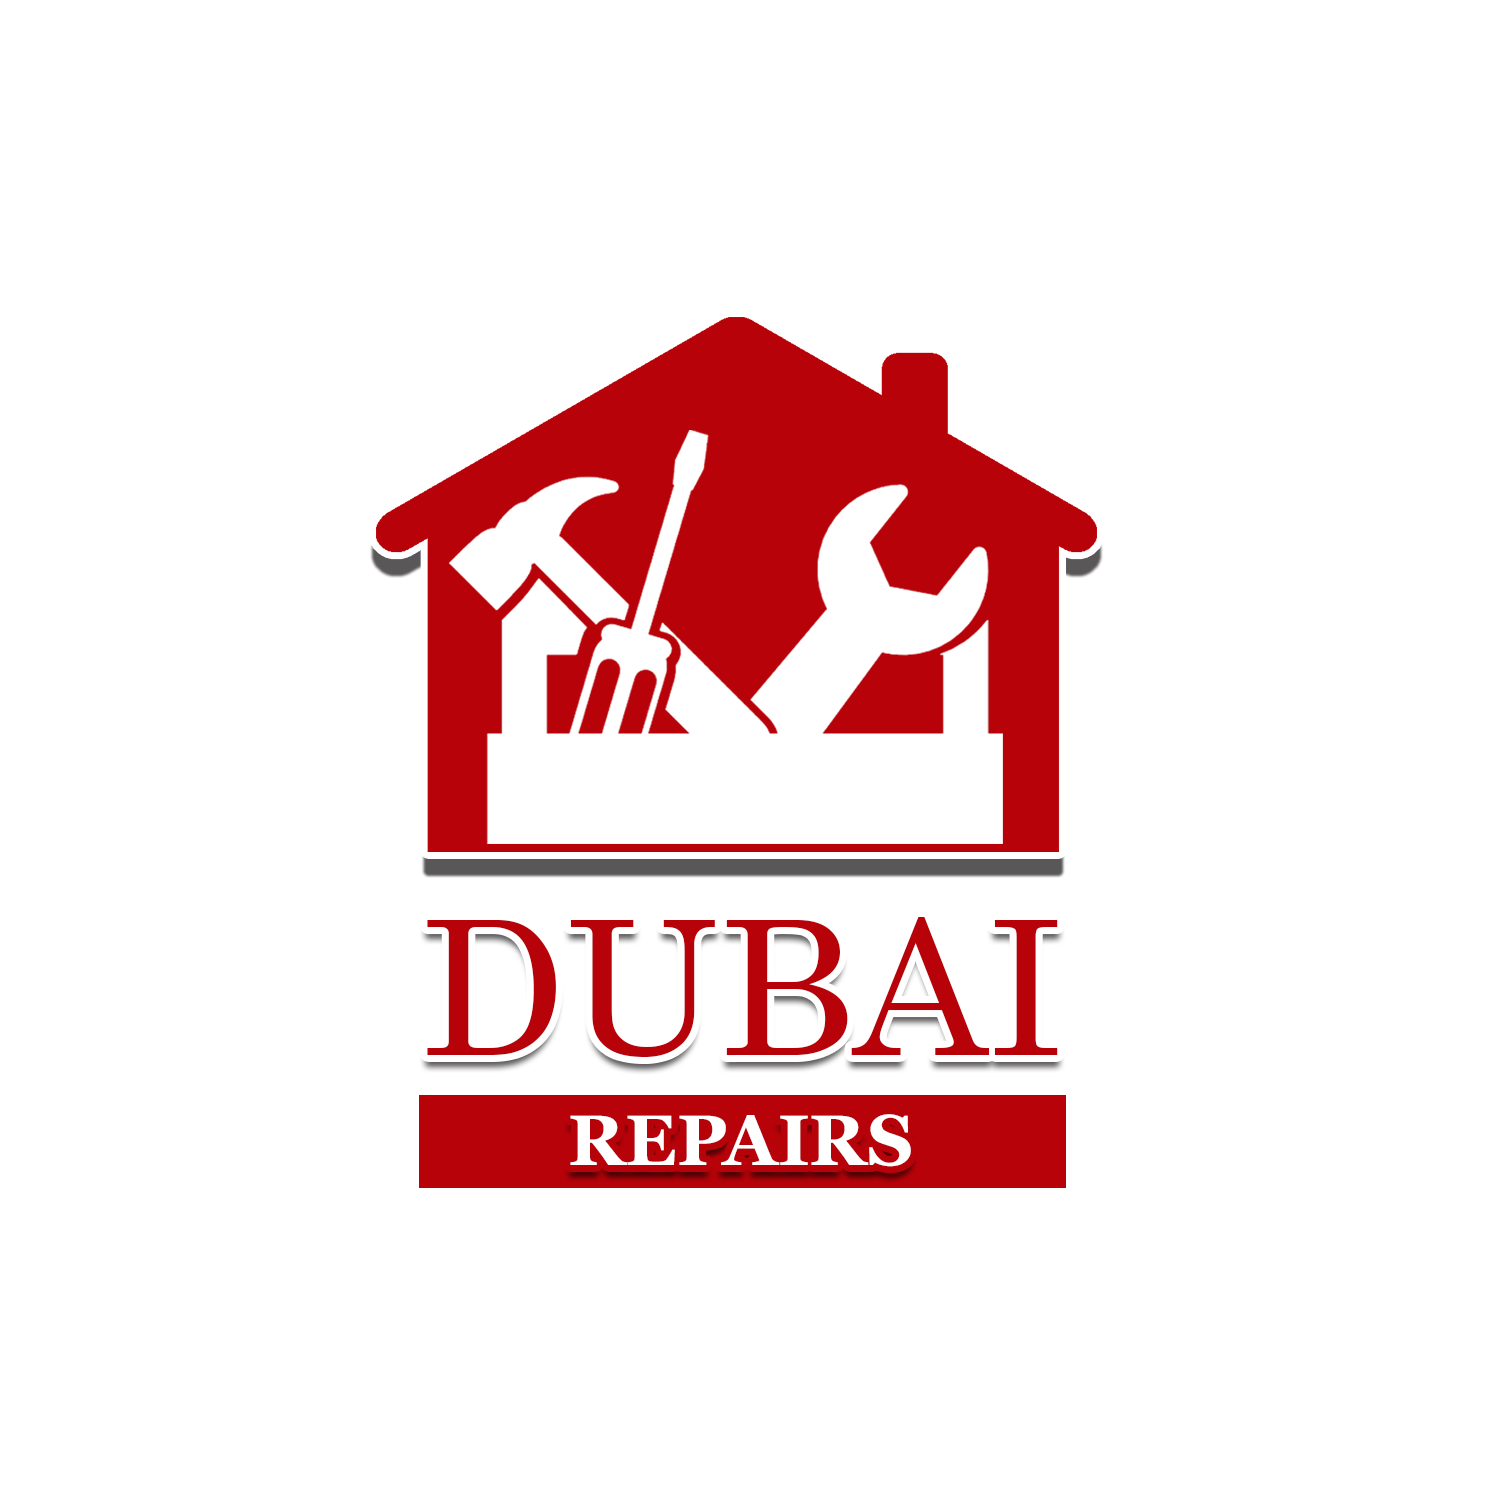 Dubai Repairs